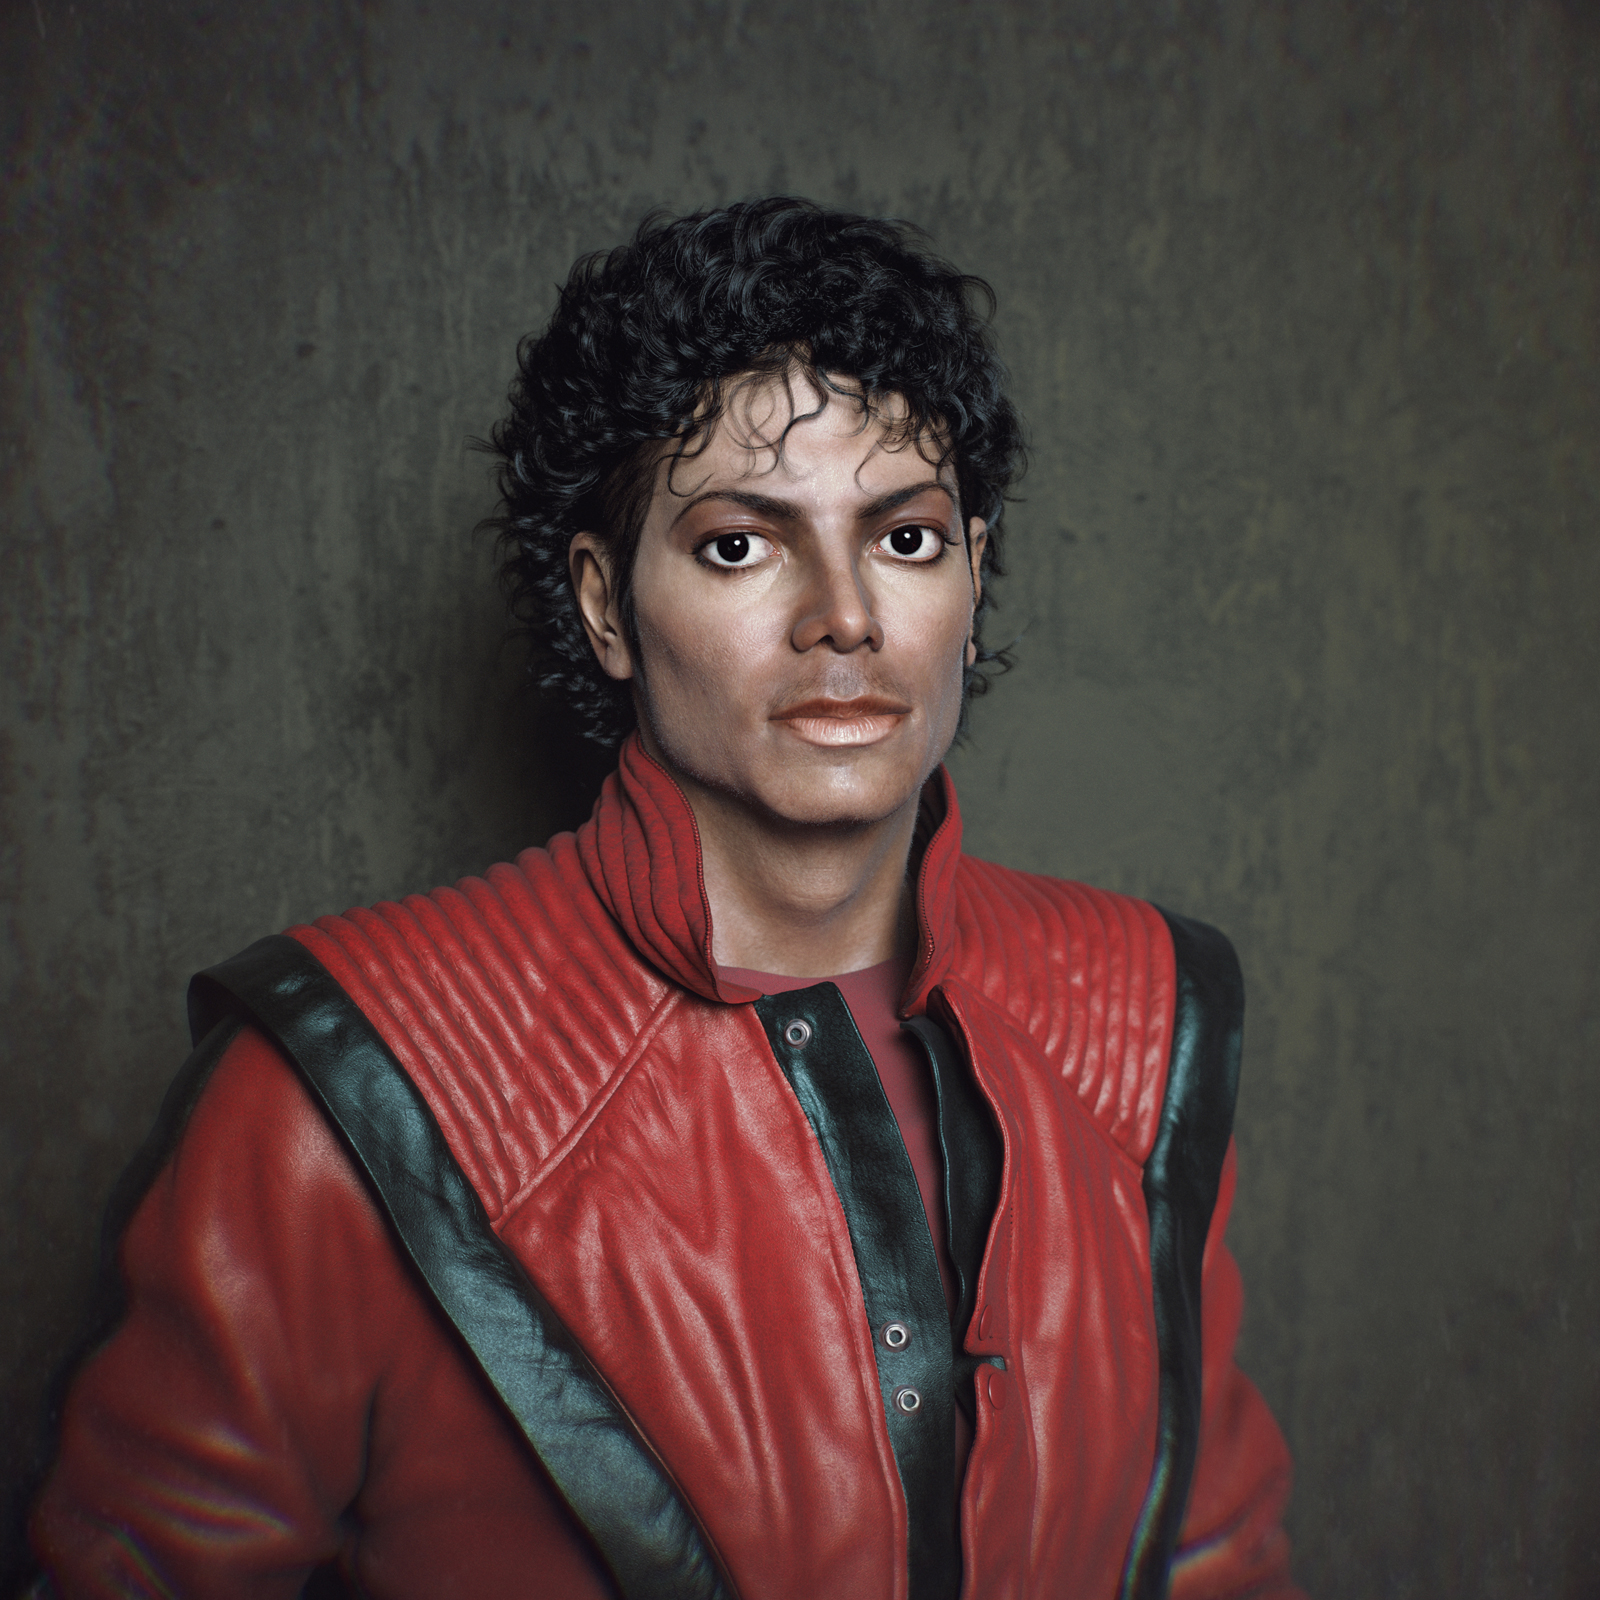 Michael Jackson Photo Shoot Thriller